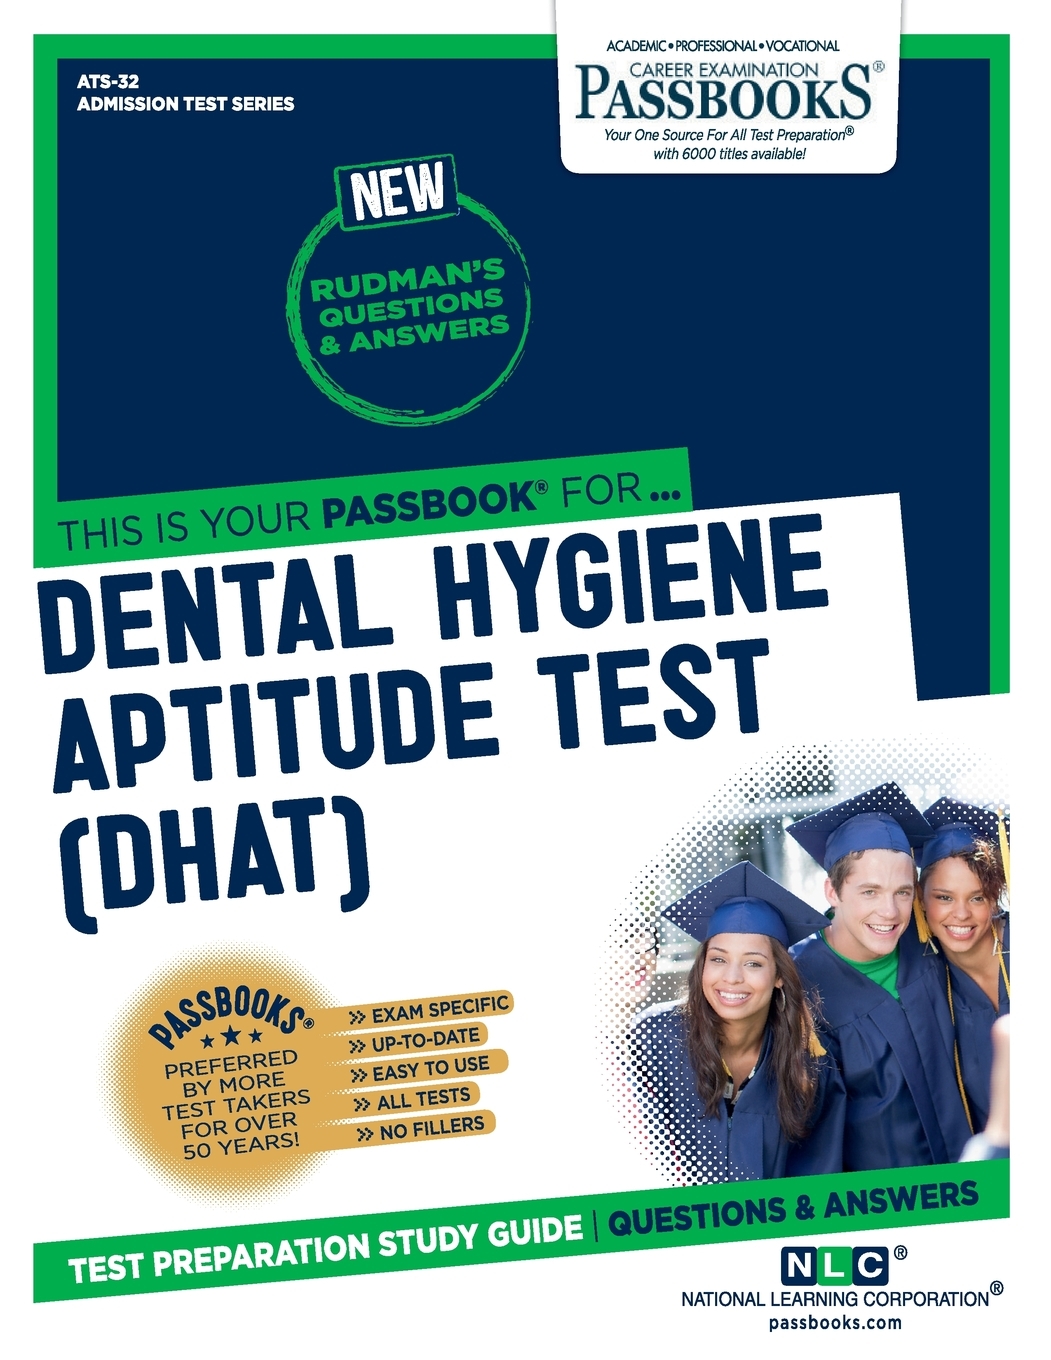 Dental Hygiene Aptitude Test DHAT Paperback Walmart Walmart